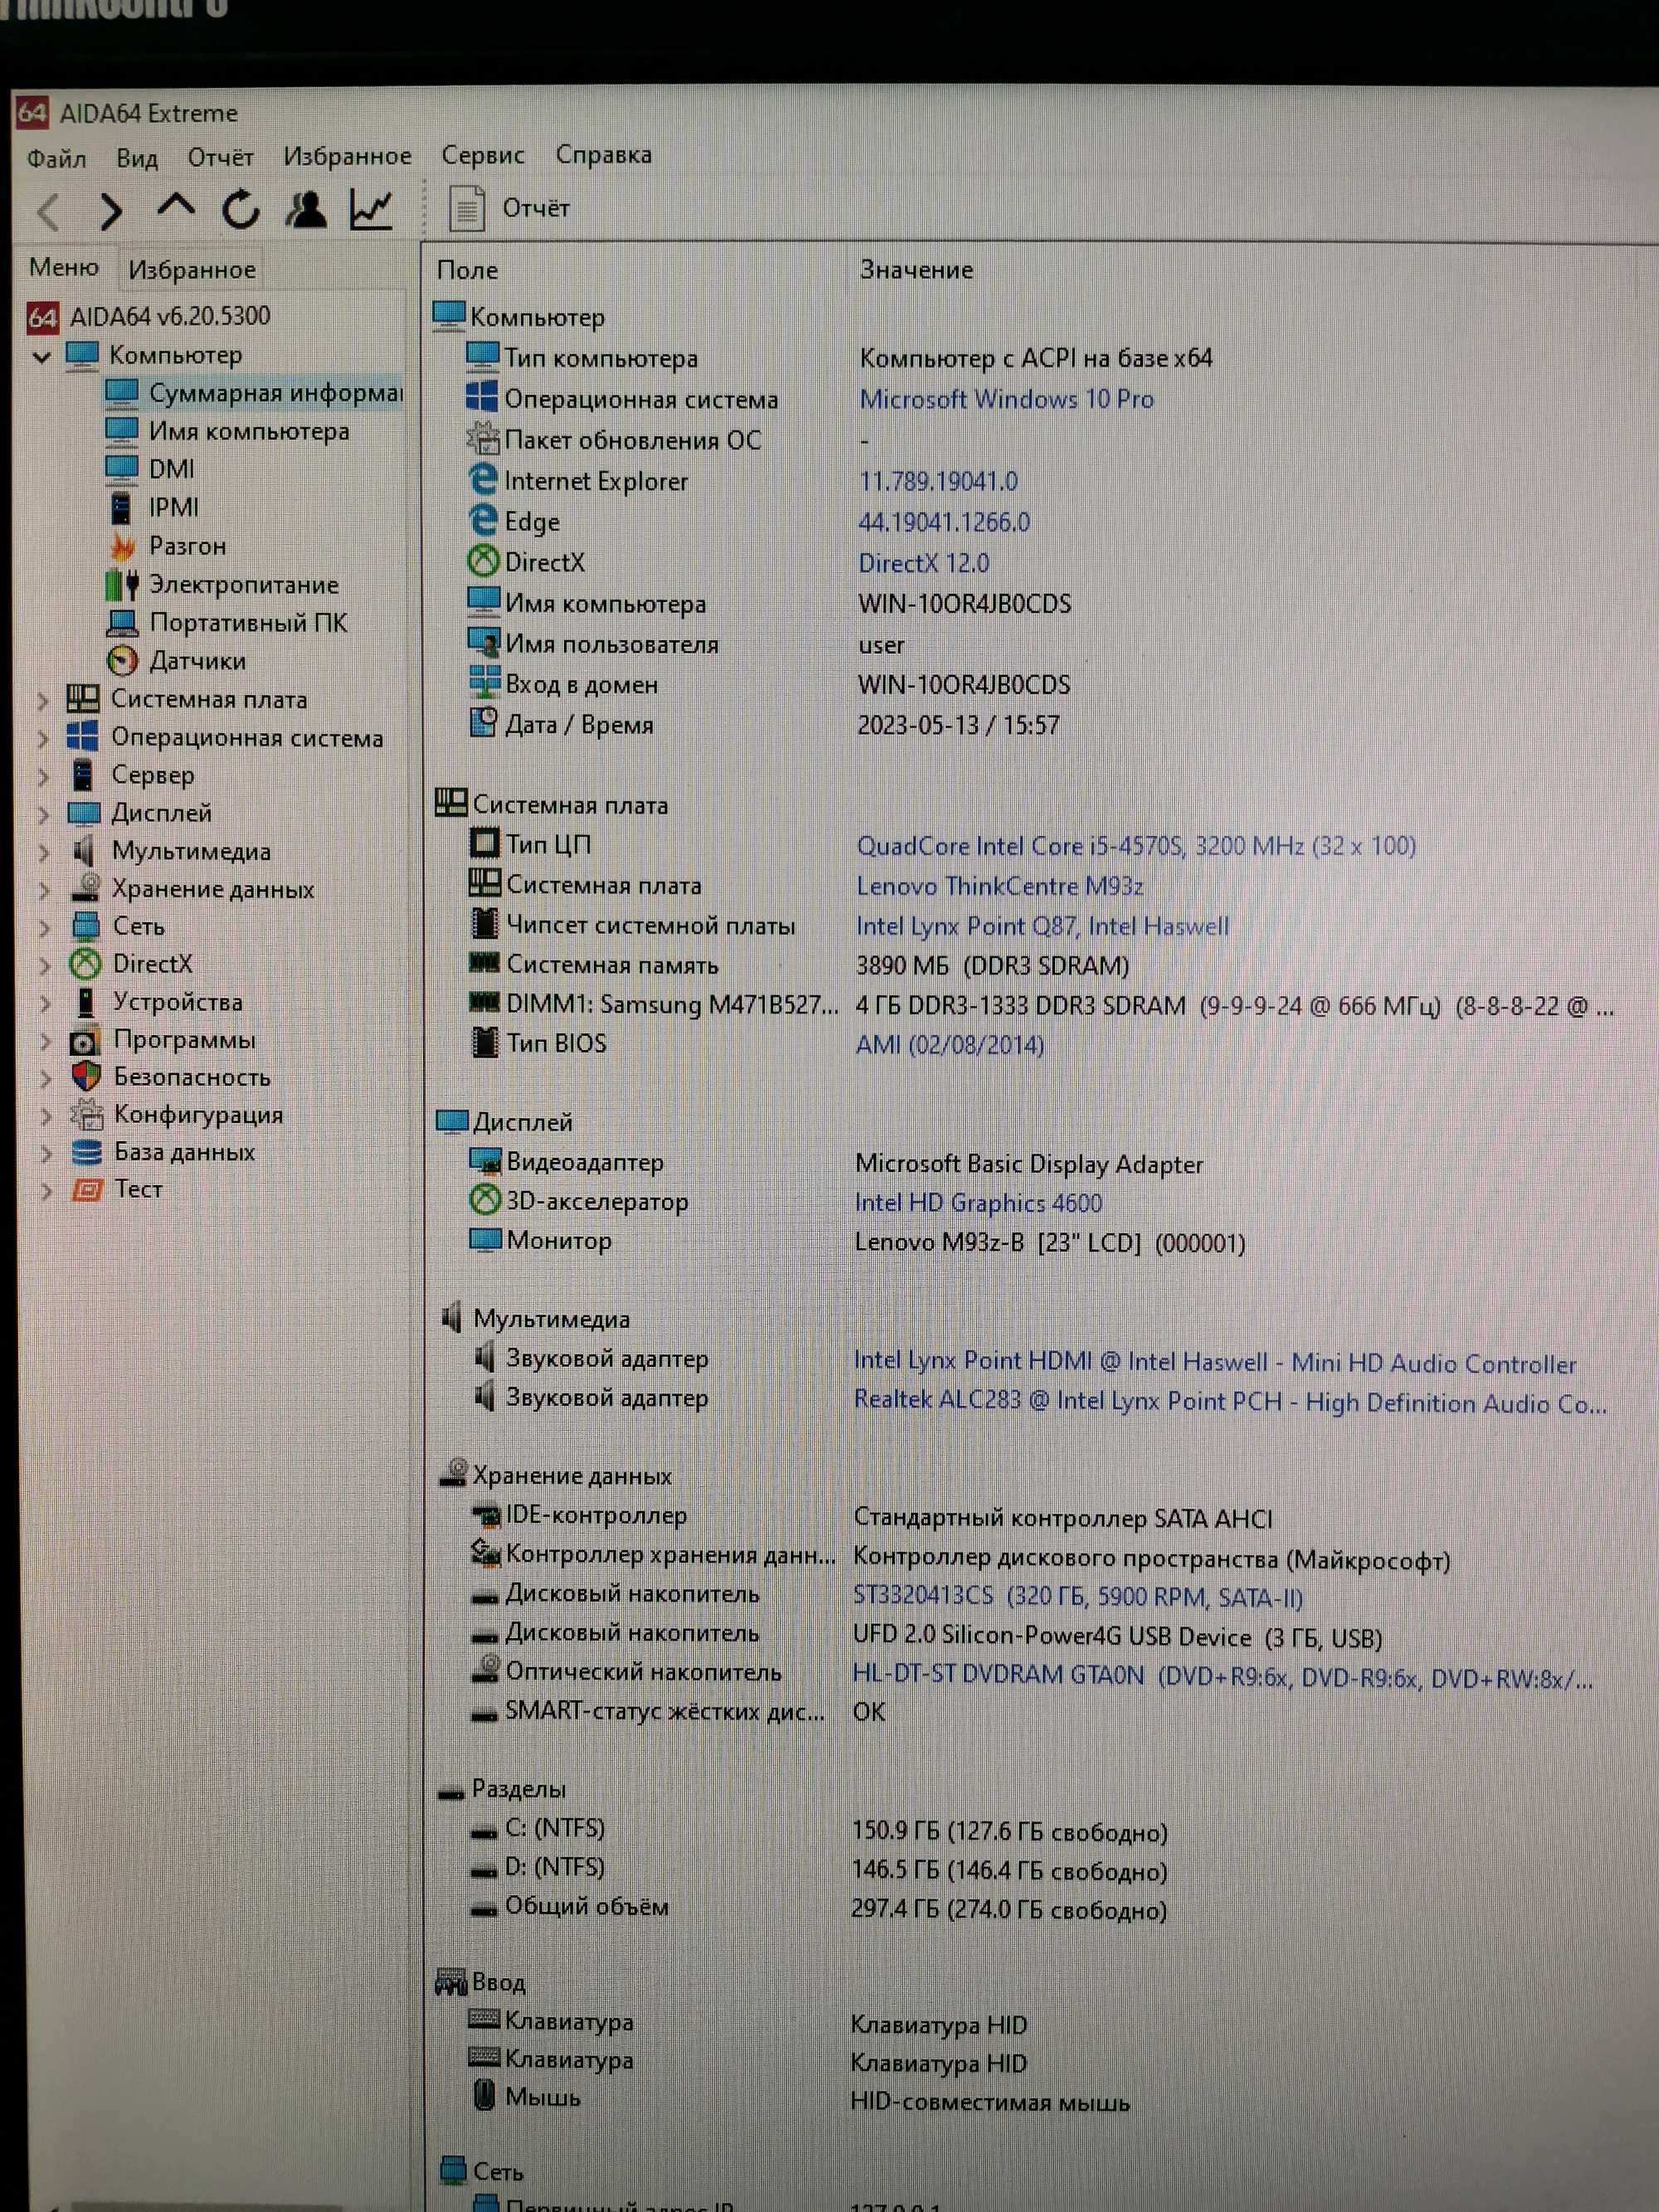 Моноблок 23" Lenovo ThinkCentre M93z All-In-One Desktop(Core i5-4750s)